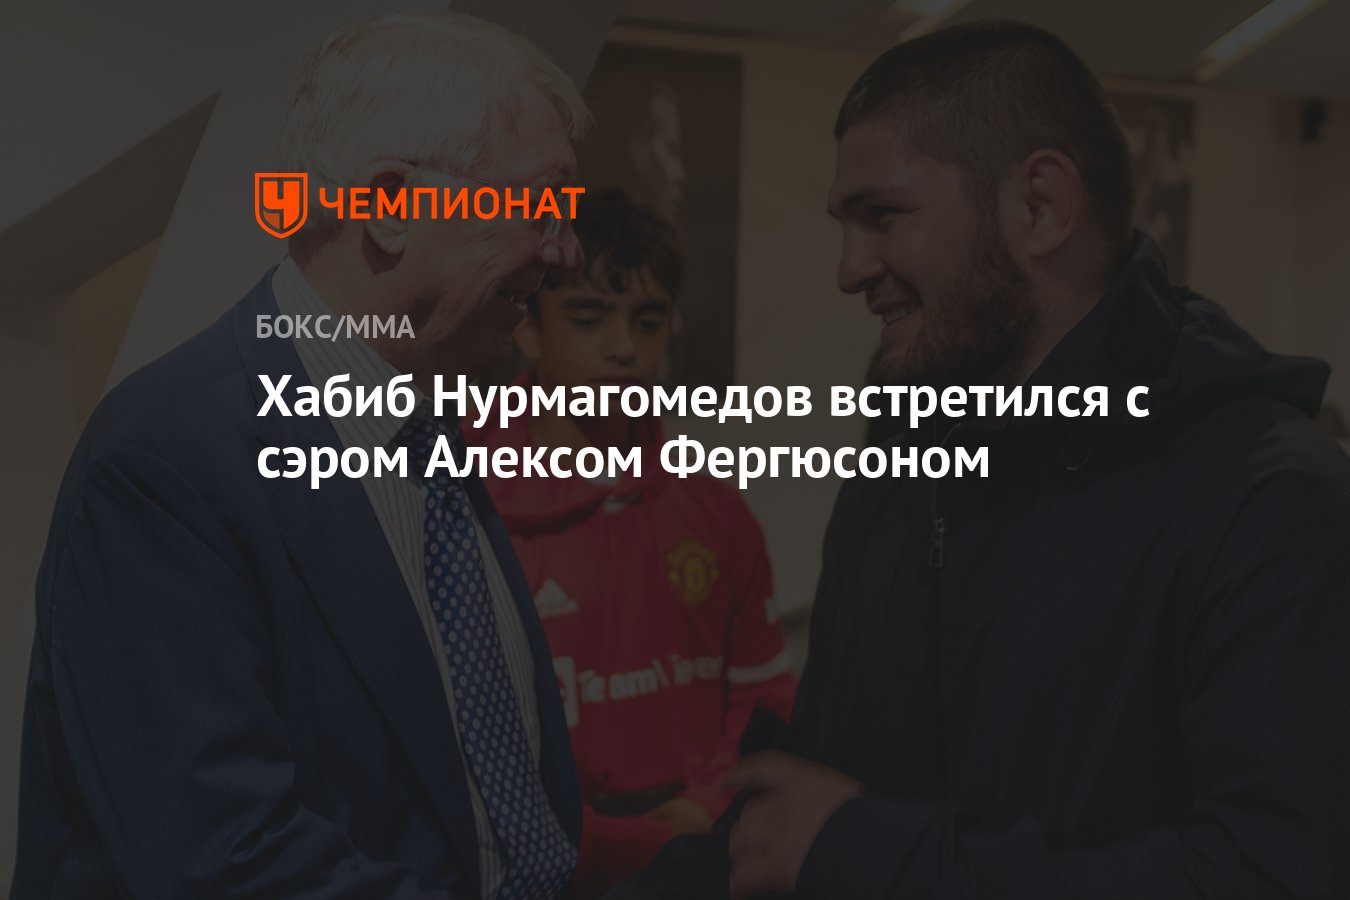 Khabib Nurmagomedov met with Sir Alex Ferguson thumbnail